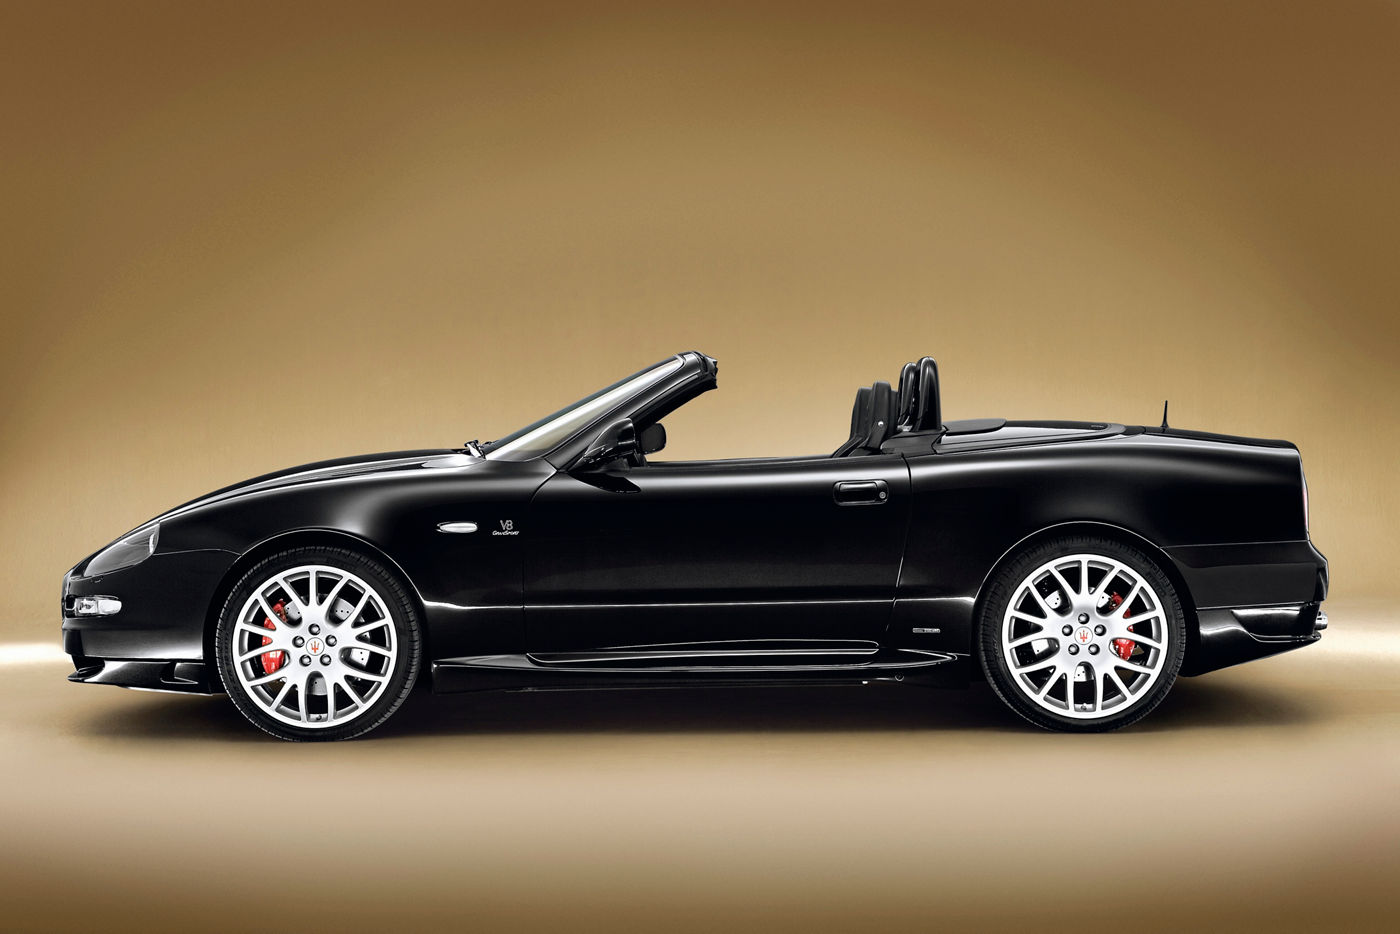 2004 Maserati GranSport Spyder M138 - black convertible overview